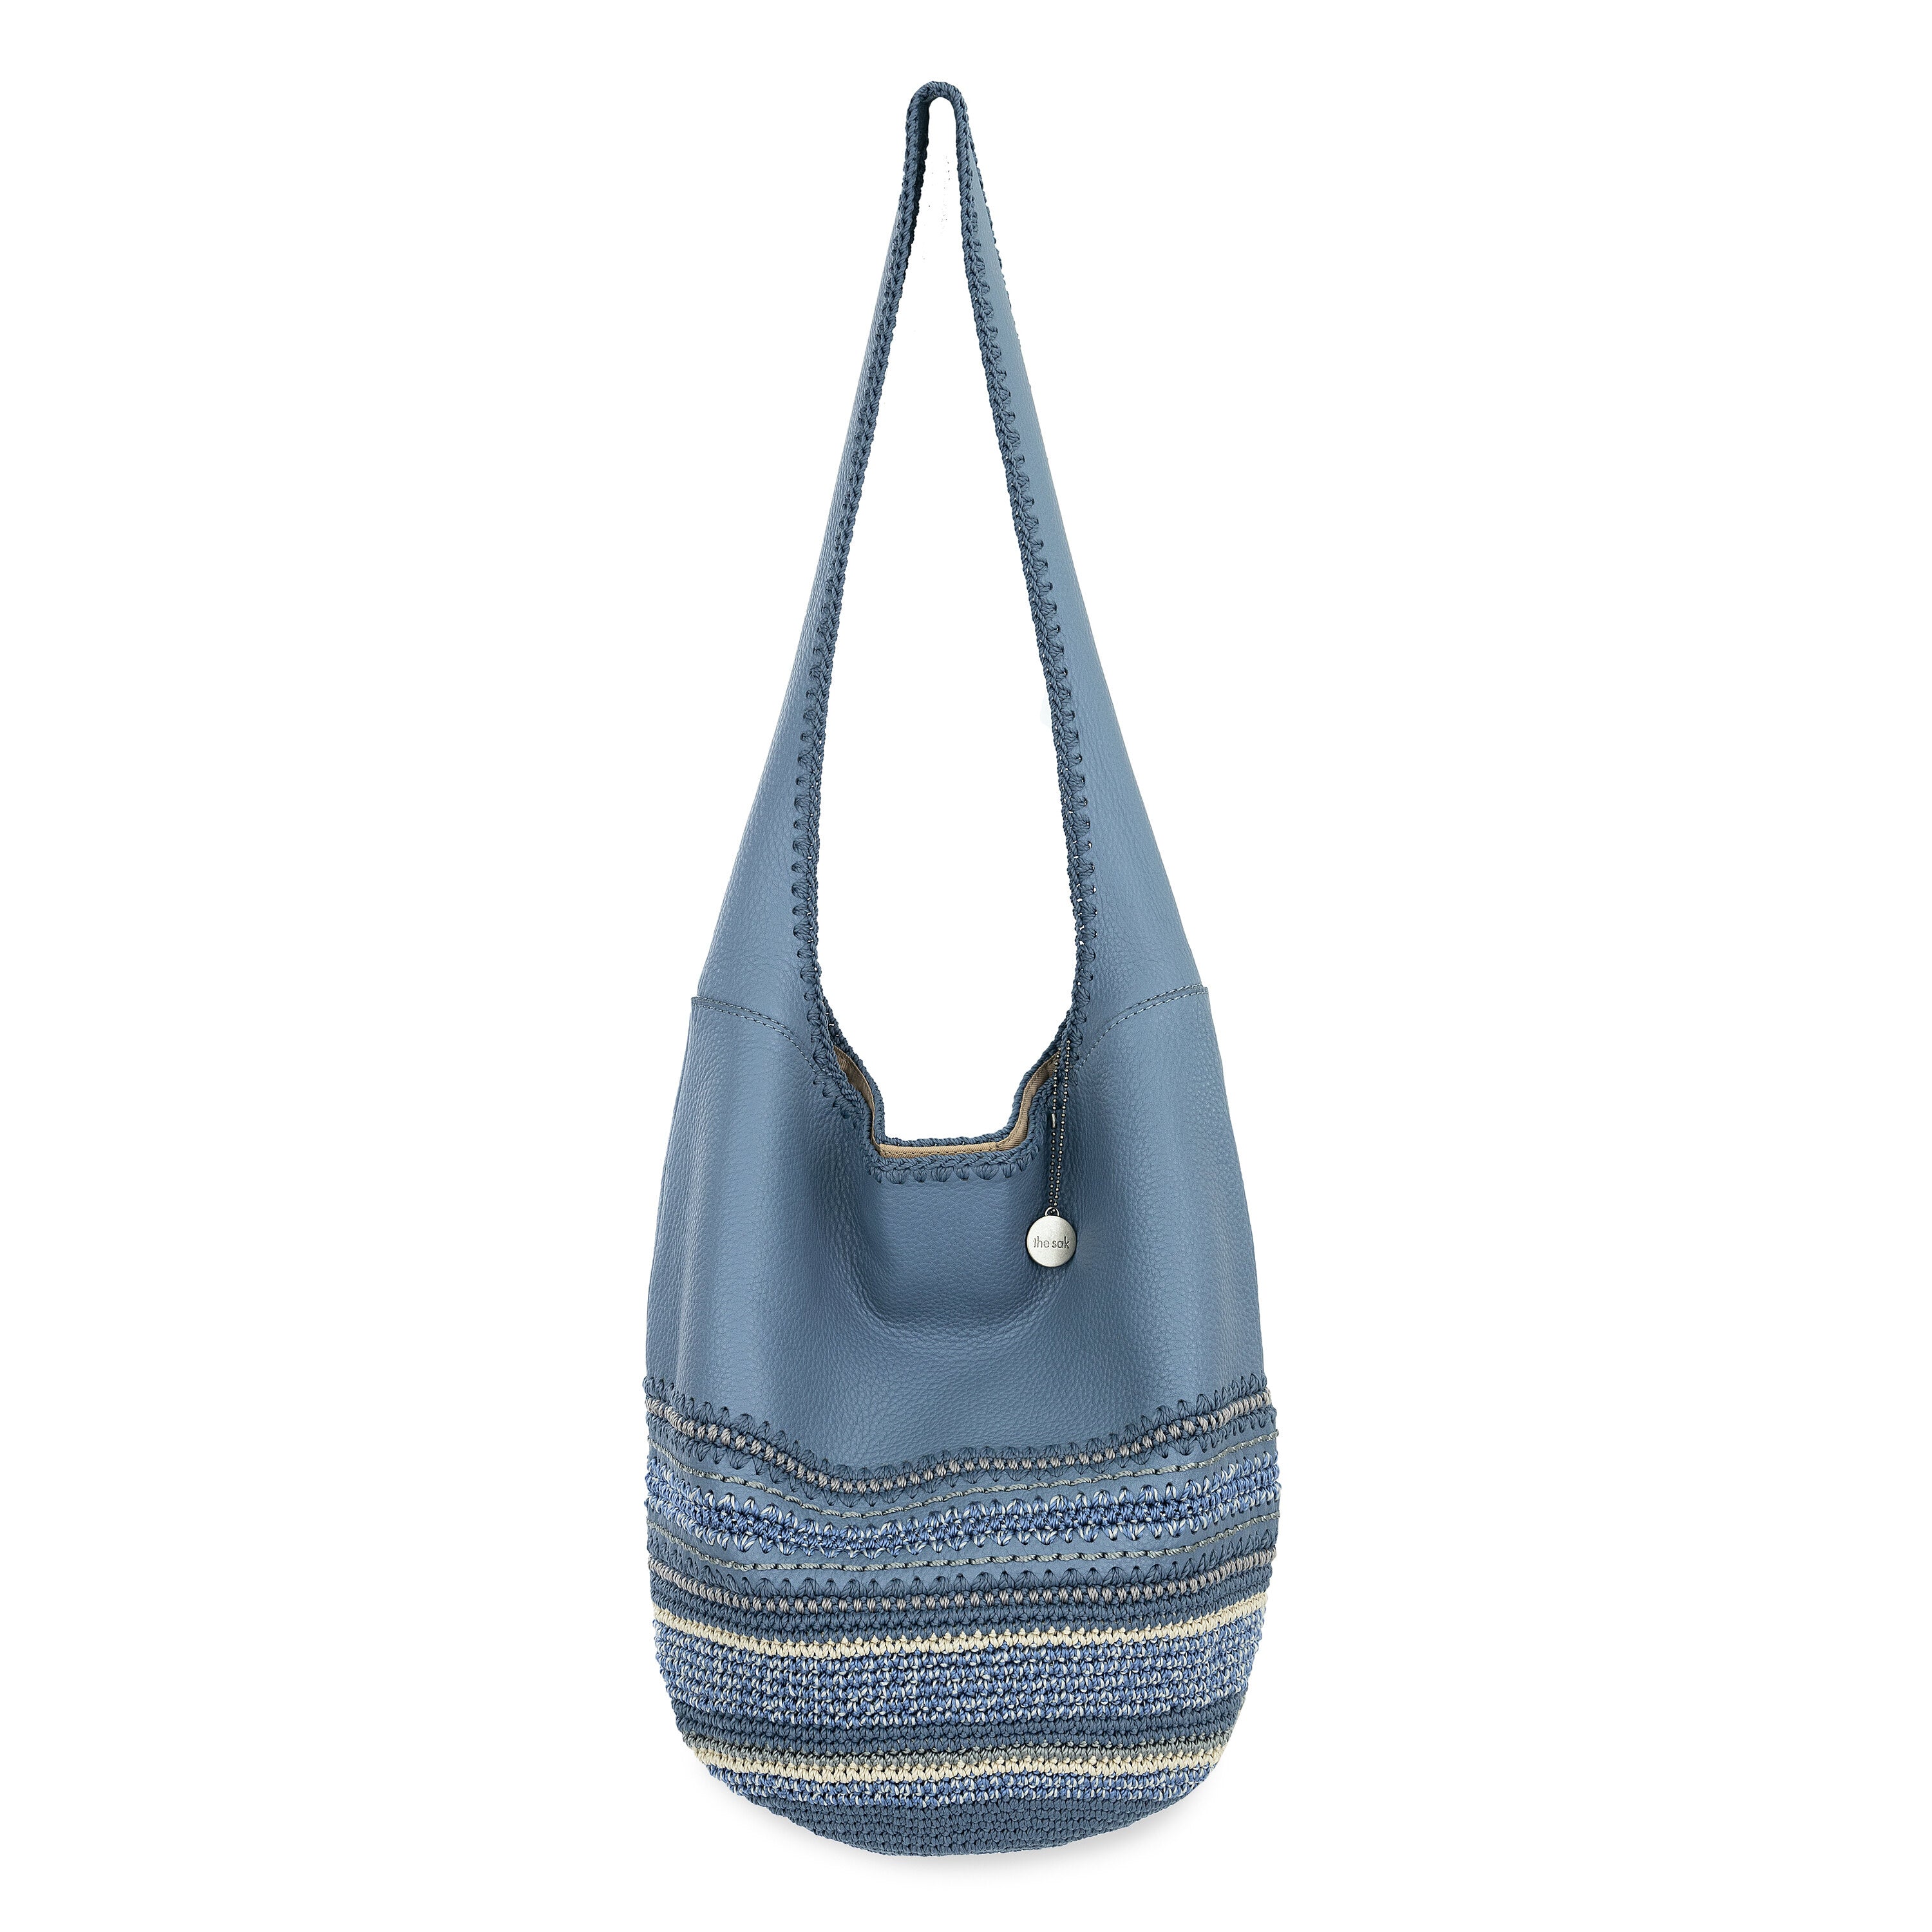 120 Hobo | Crochet Shoulder Bag – The Sak